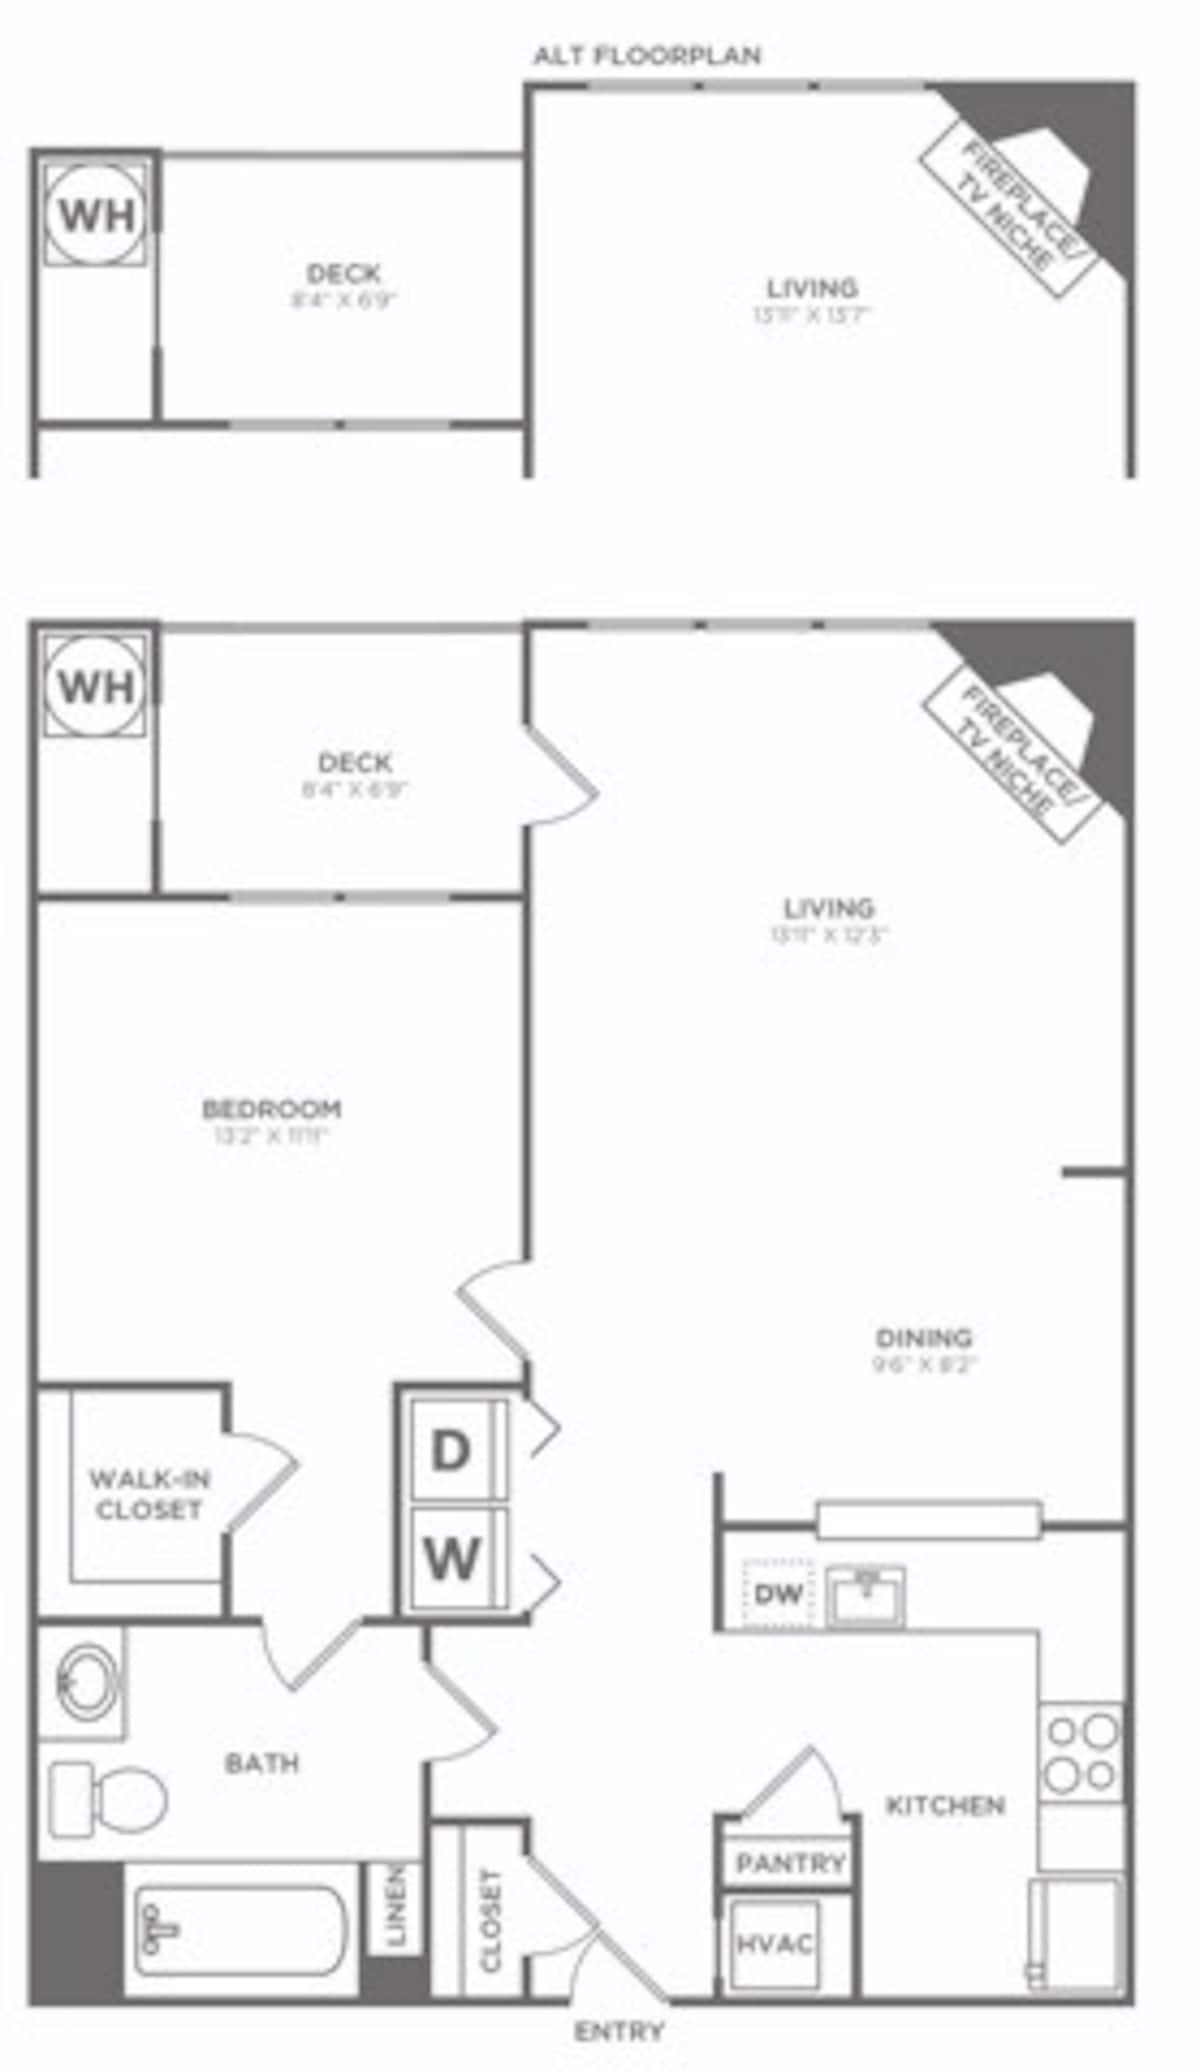 Floorplan diagram for One Bedroom One Bath (755 SF), showing 1 bedroom